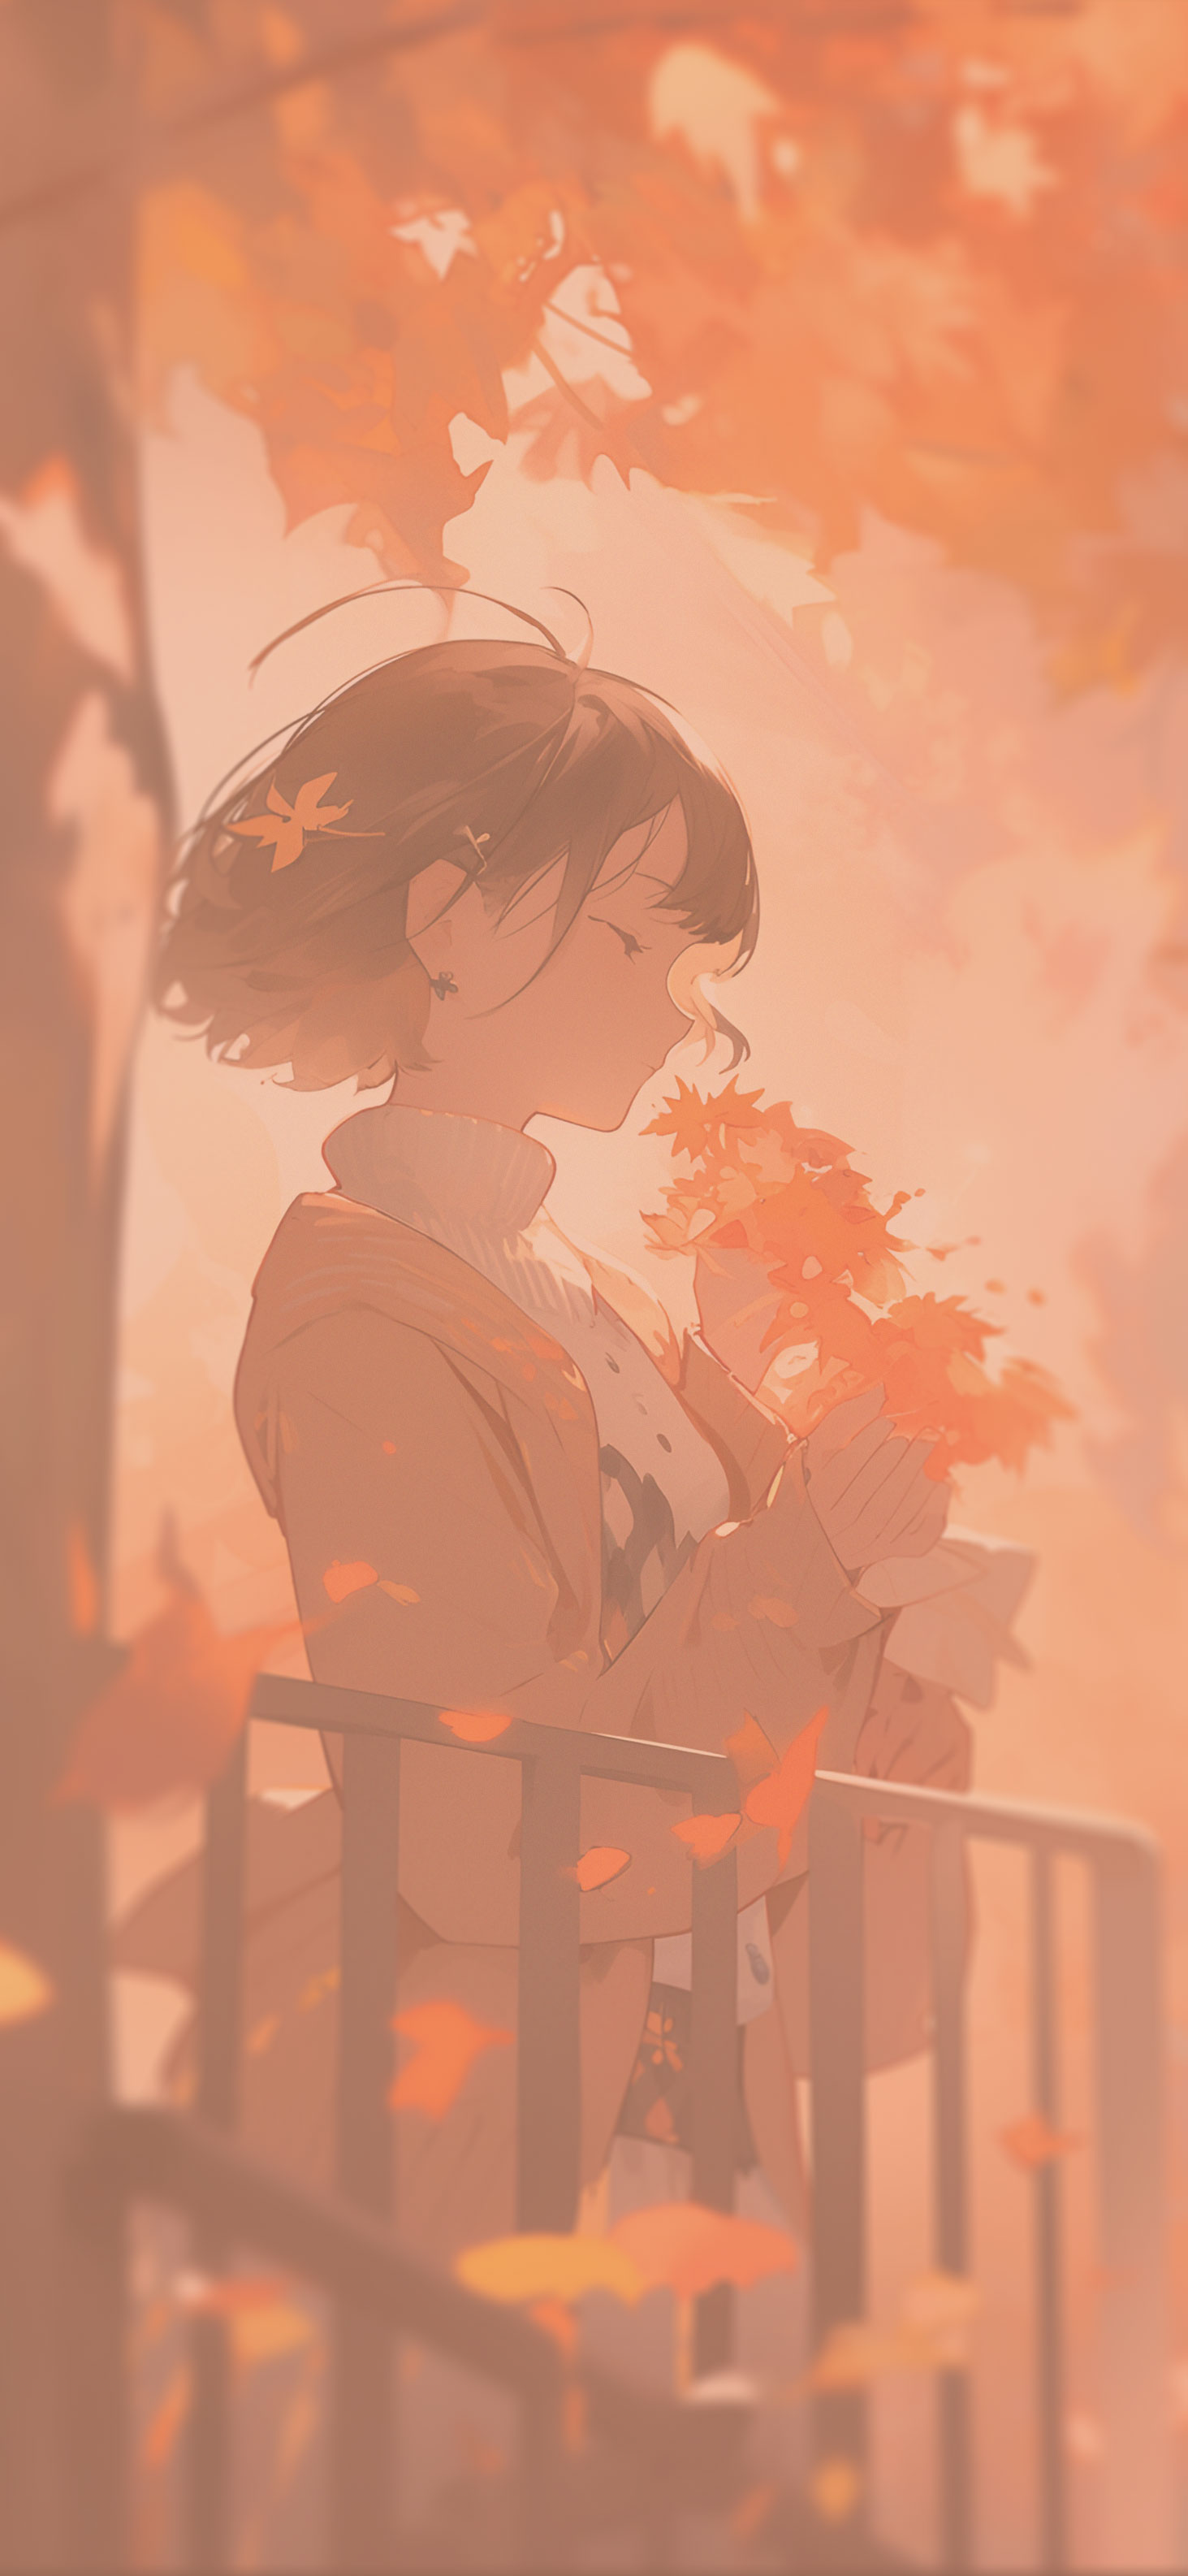 Anime Girl Autumn Scenic Point #2 by HisapiAI on DeviantArt